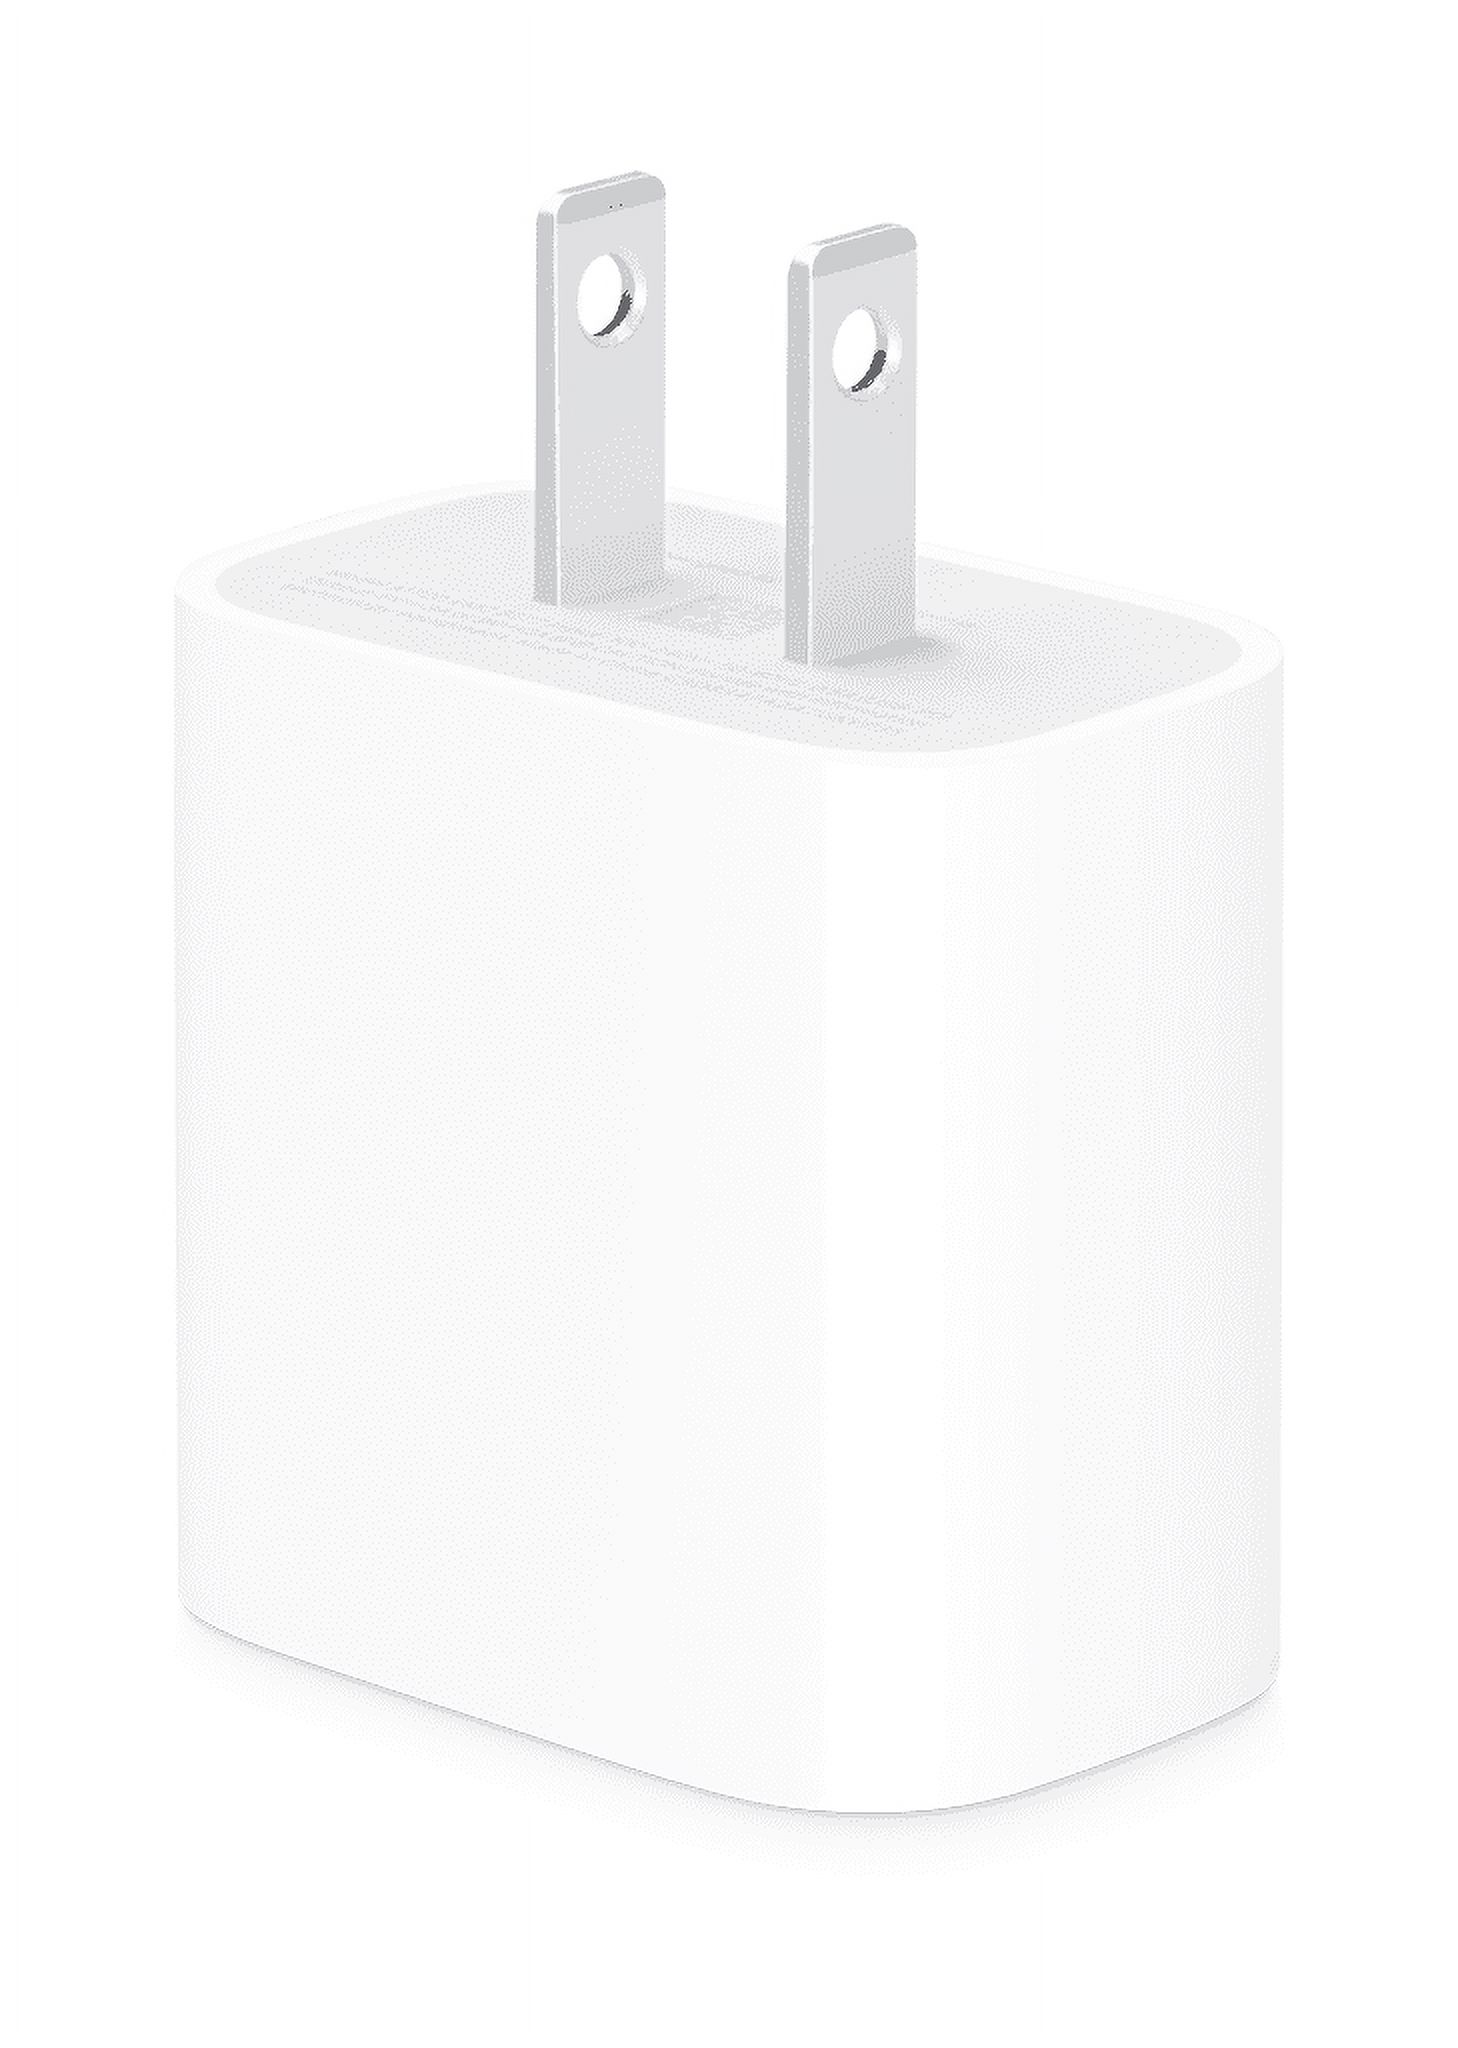 Apple 20W USB-C Power Adapter, White - image 1 of 2